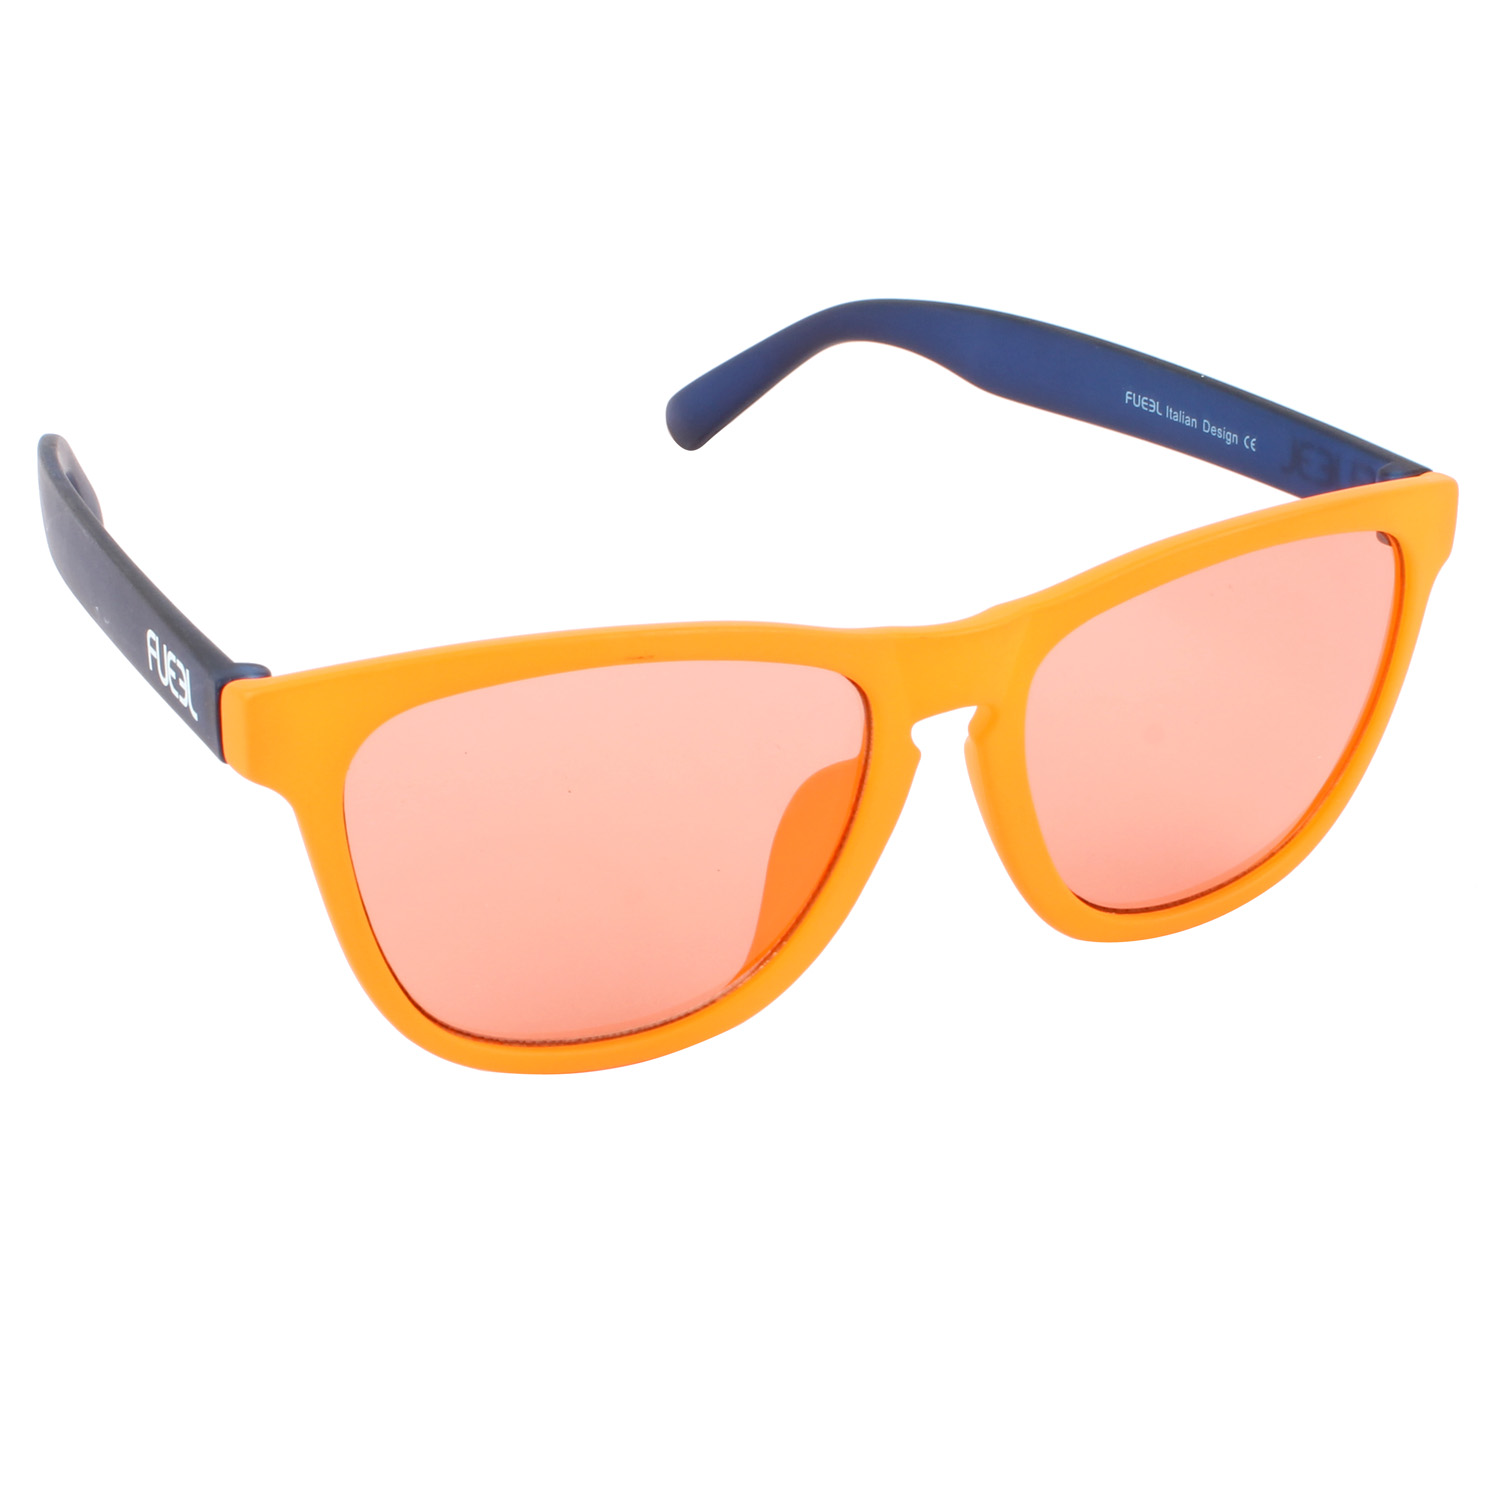 jst 4 | sunglasses wholesale market in kolkata | stylish sunglasses for  men's and women's | impoter - YouTube